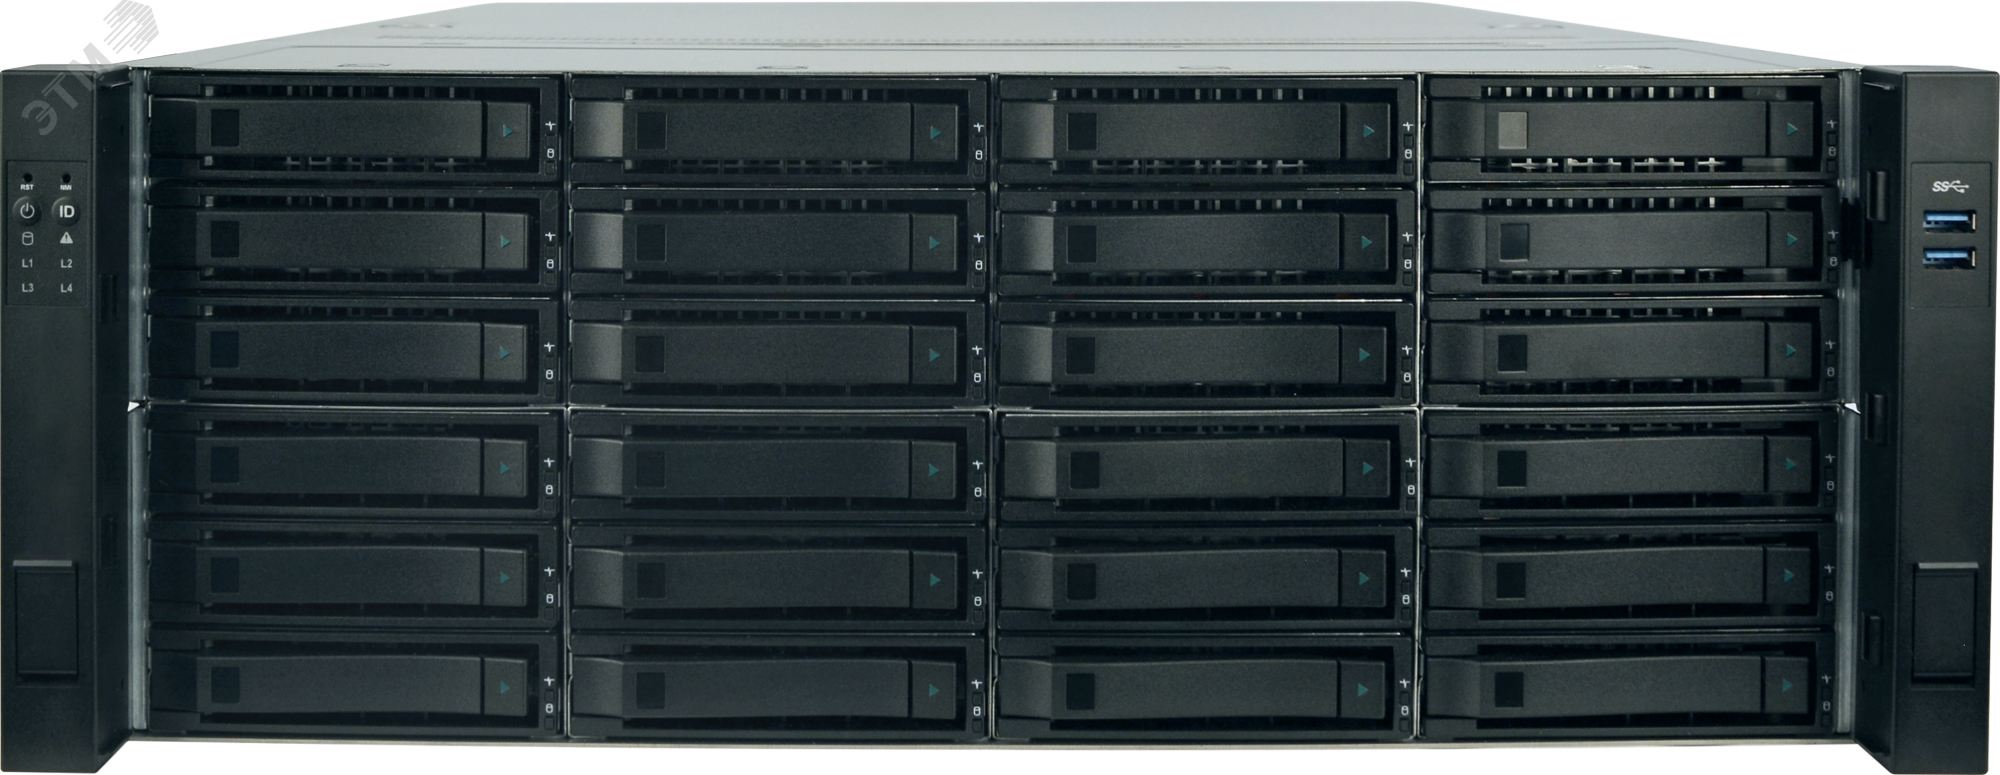 Сервер среднего уровня D436FW 4U, Xeon Scalable, до 38 накопителей, ОЗУ до 4 ТБ DDR4 T50 D436FW Aquarius - превью 4